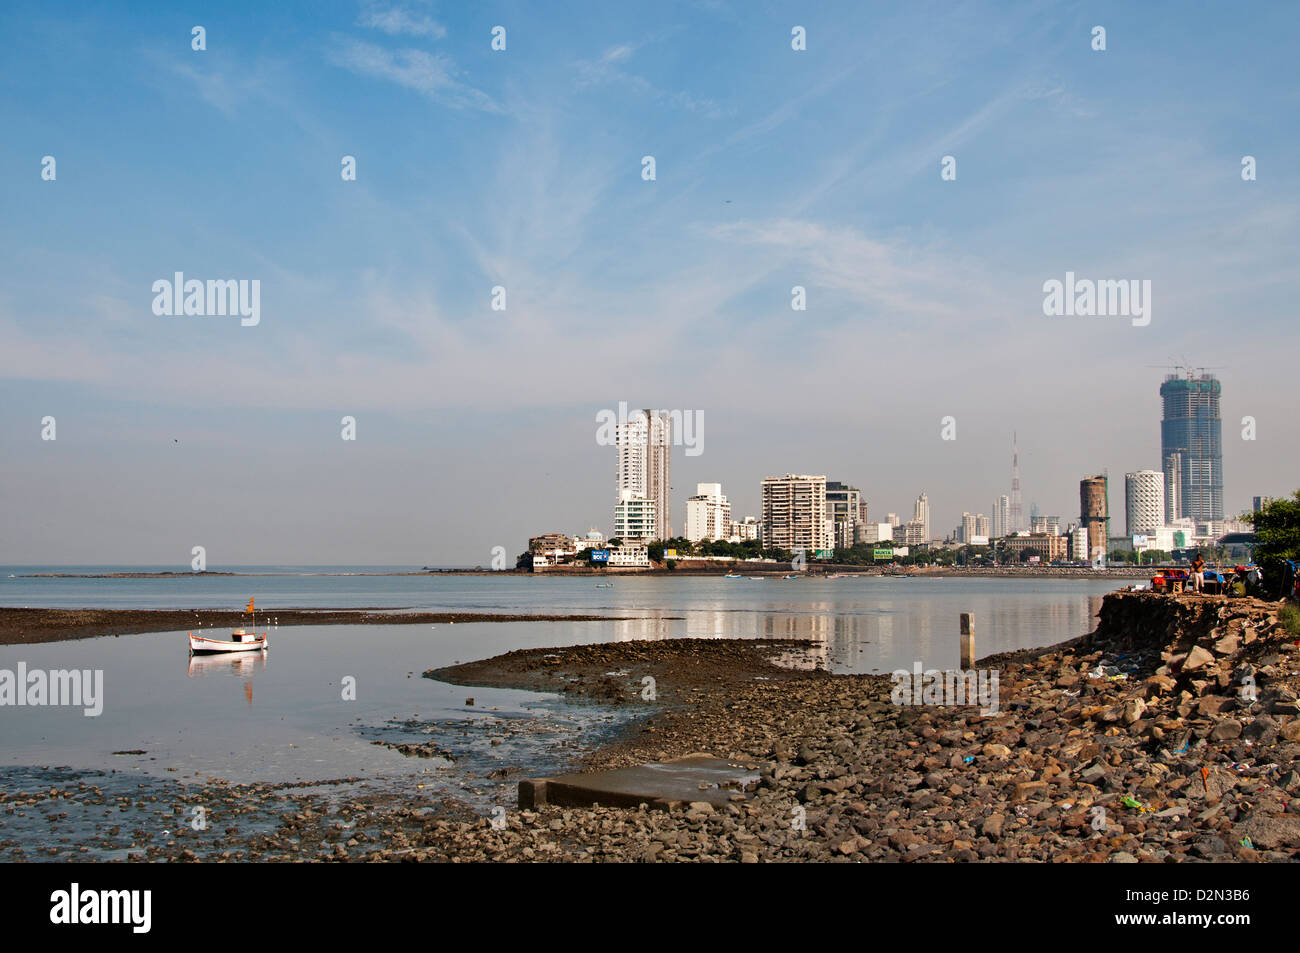 The Suburbs Bandra Mumbai ( Bombay ) India Bay Modern Architecture opposite of Haji Ali Mosque Stock Photo